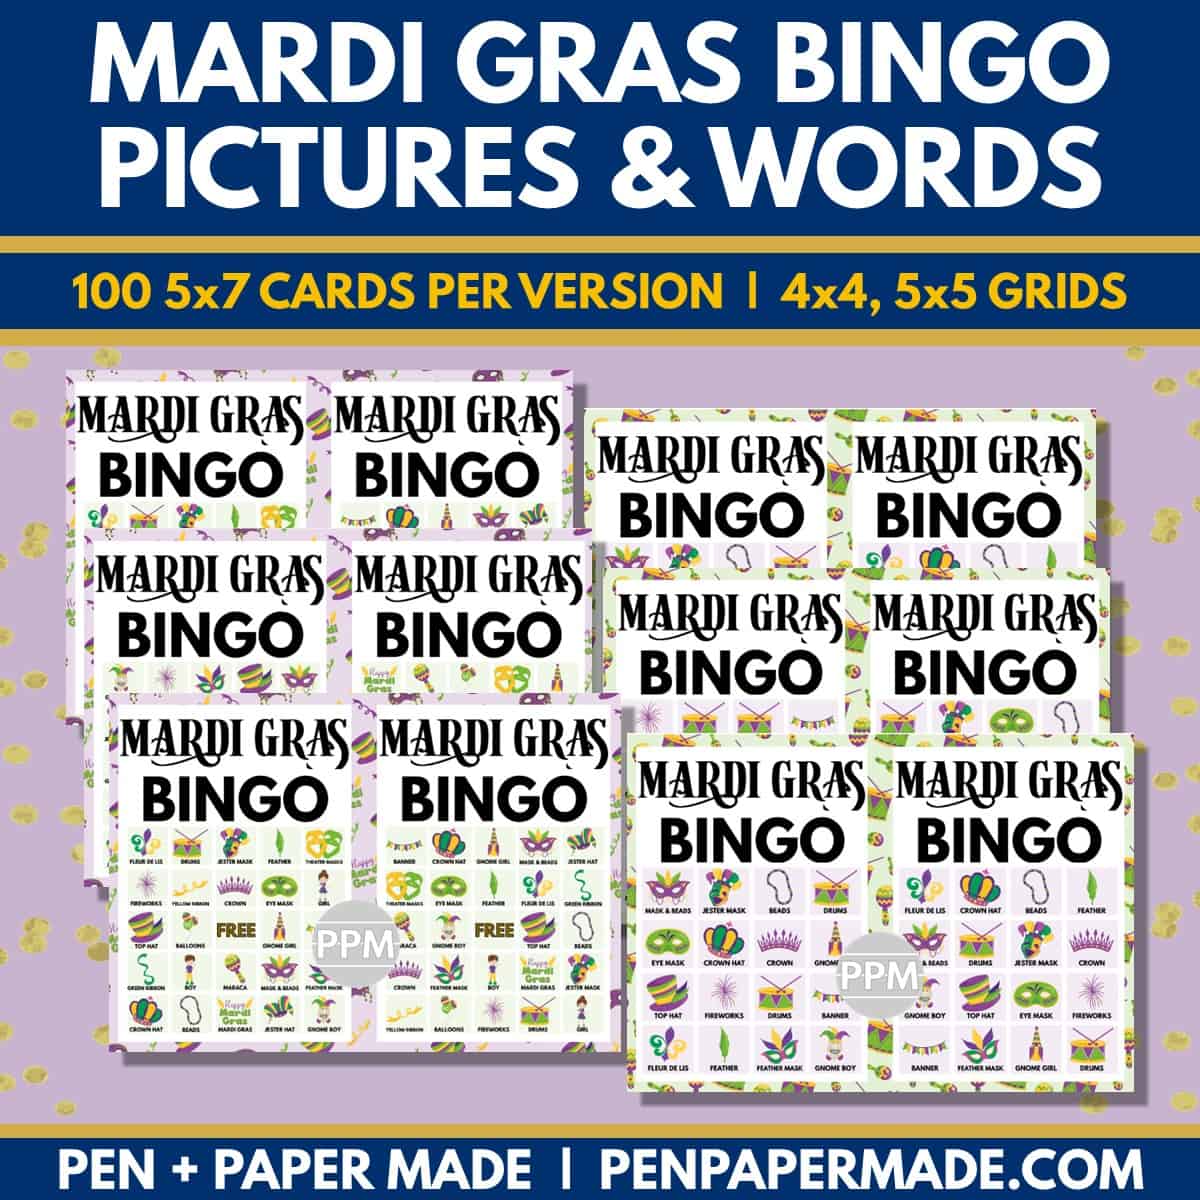 mardi gras bingo 5x5, 4x4 game cards bundle.